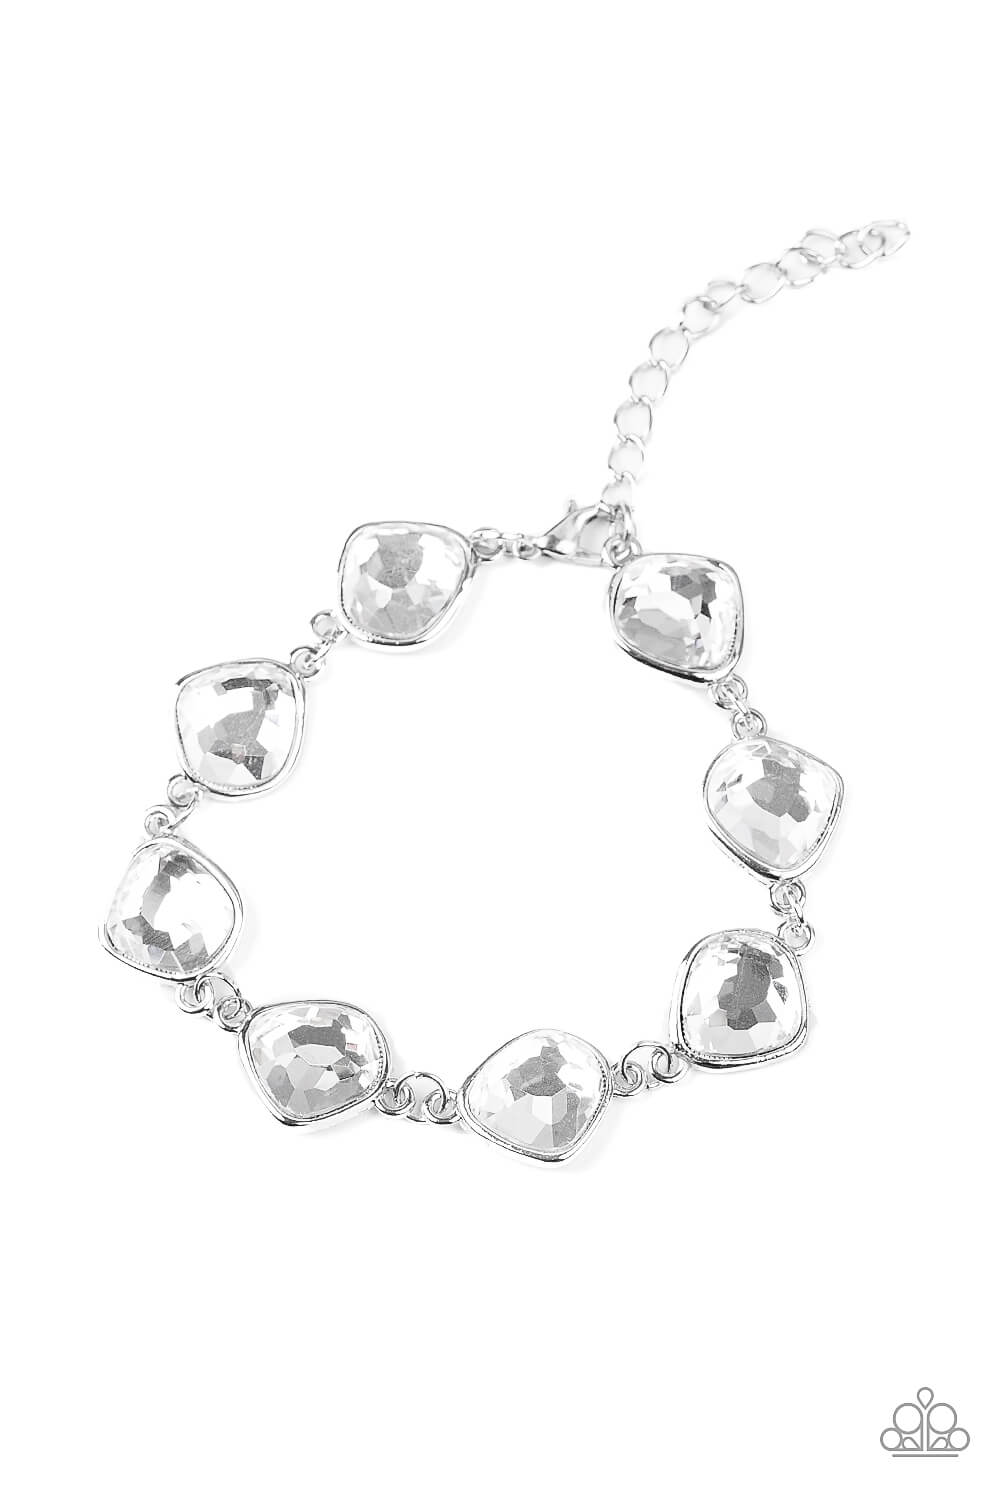 The Imperfectionist - White Gem Necklace Set & Bracelet Combo - Princess Glam Shop